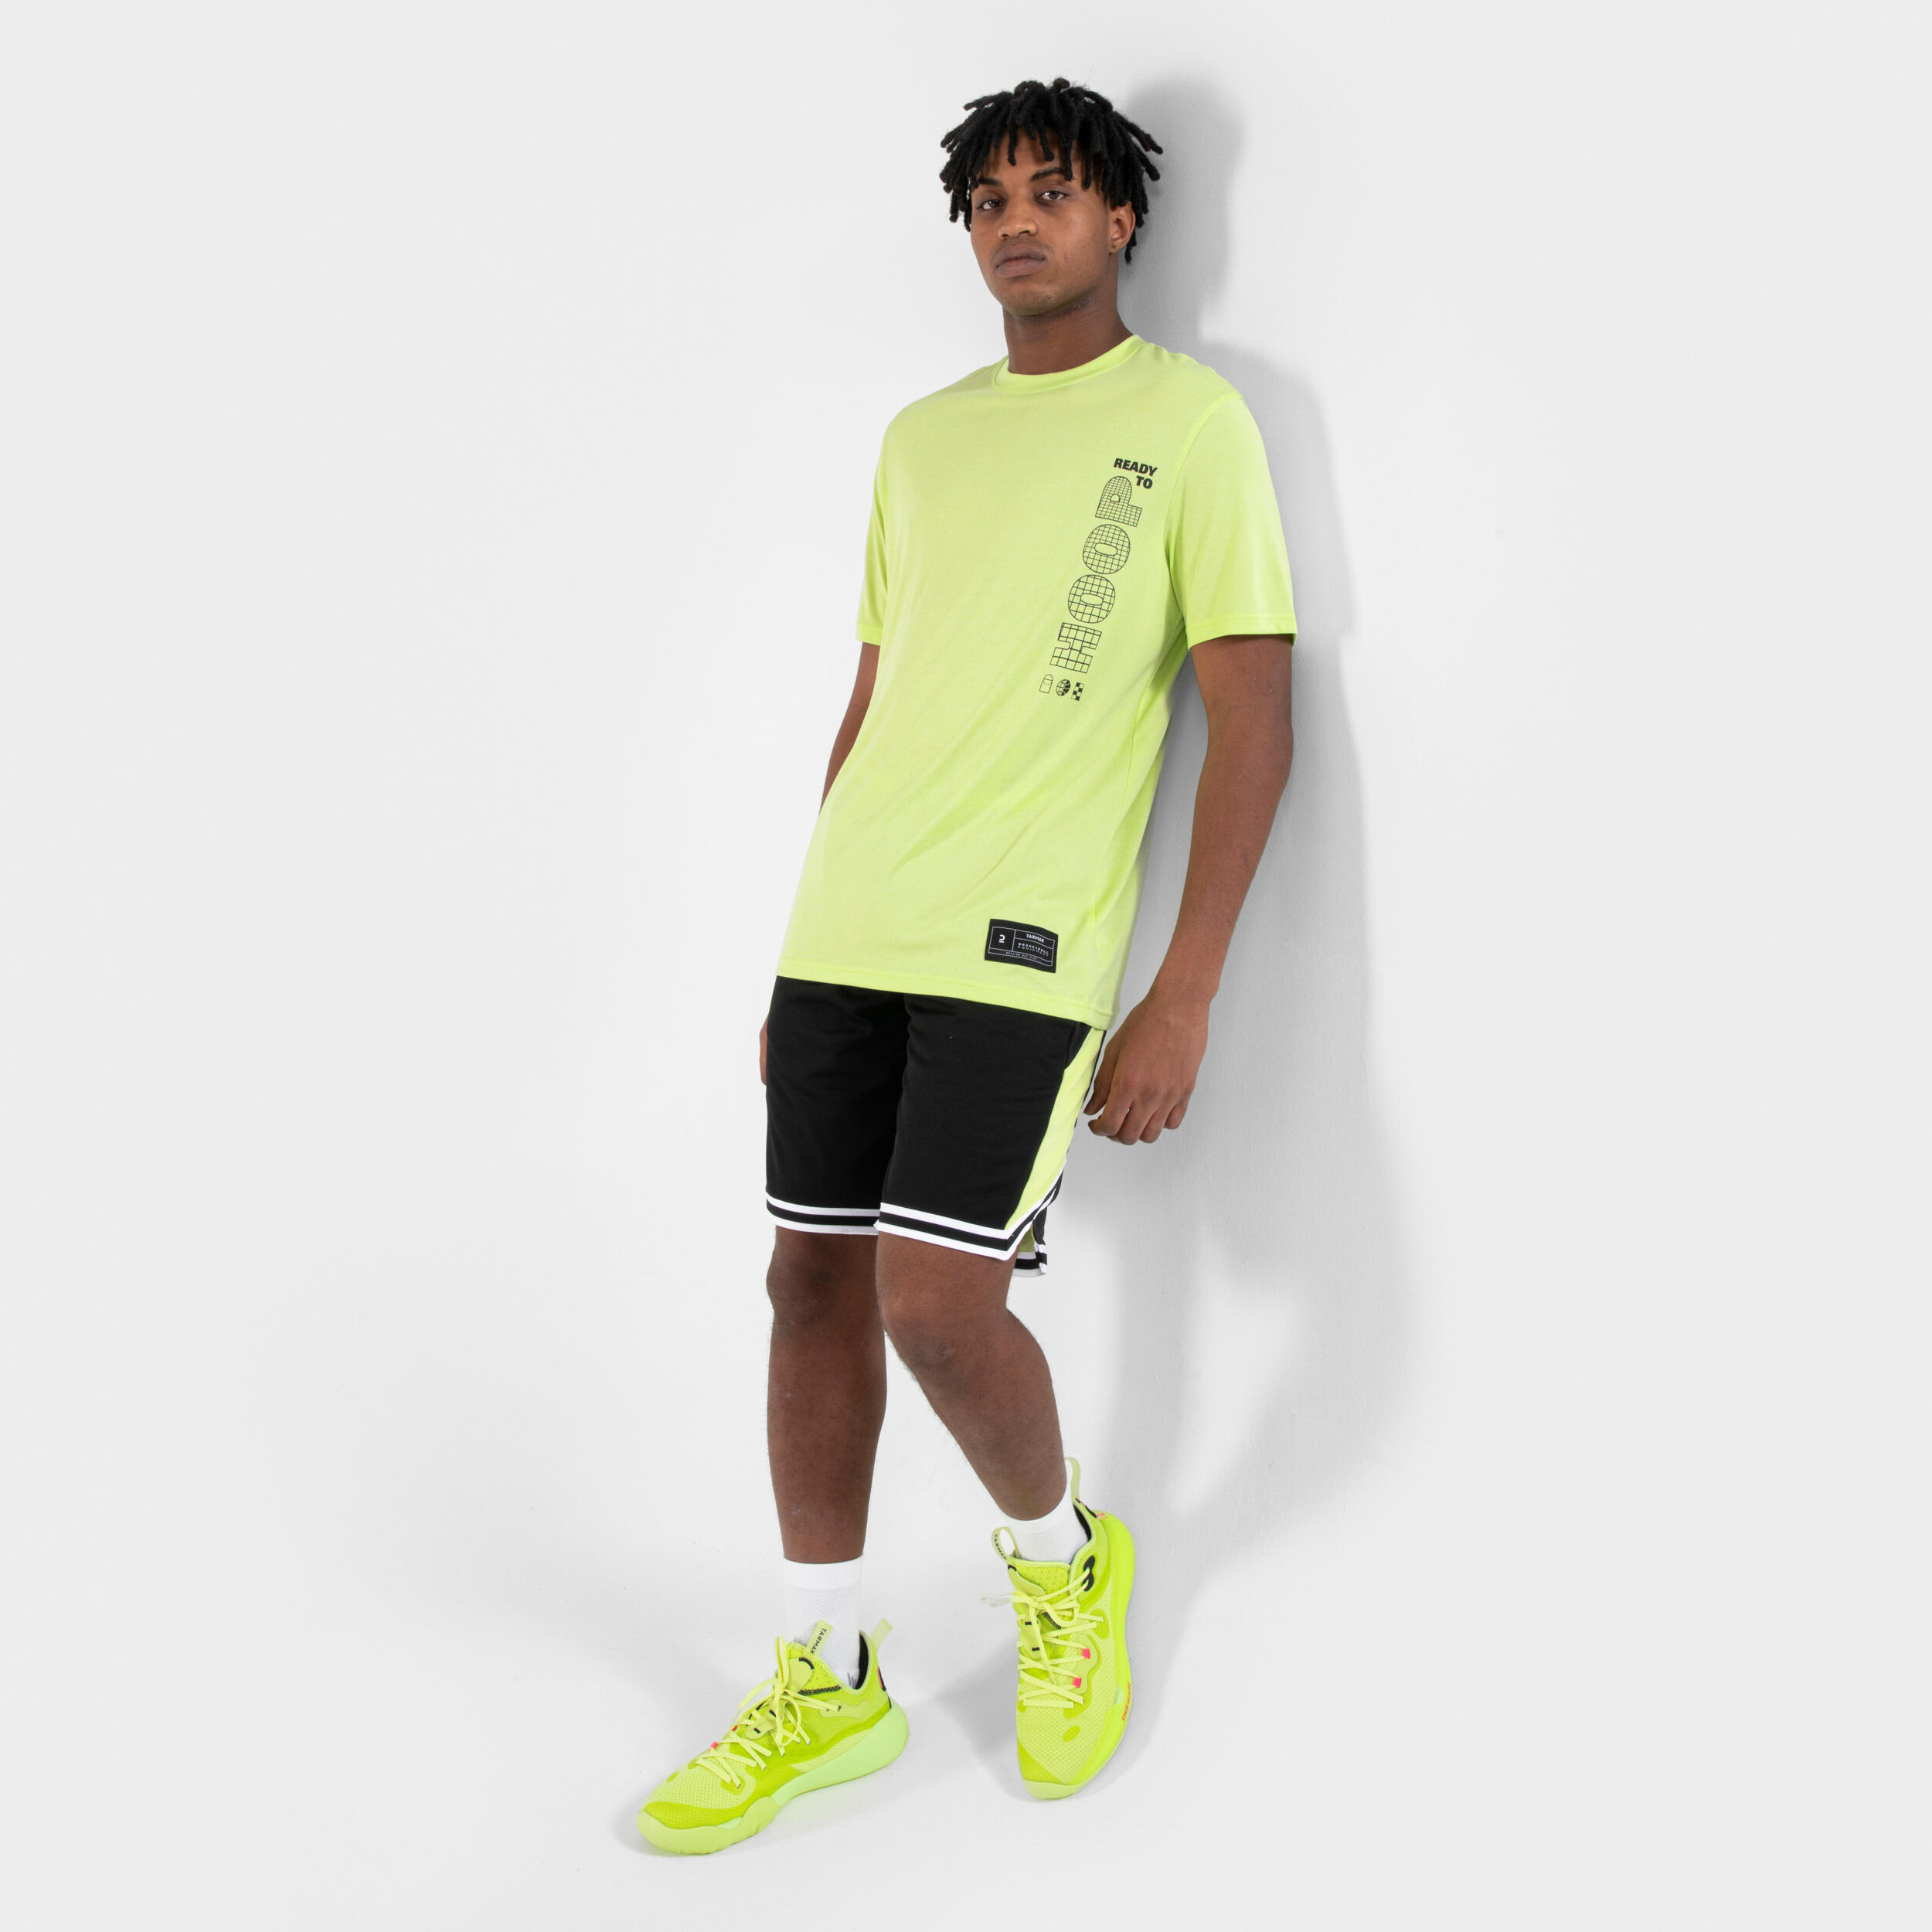 Men's/Women's Basketball T-Shirt/Jersey TS500 Fast - Yellow 3/7